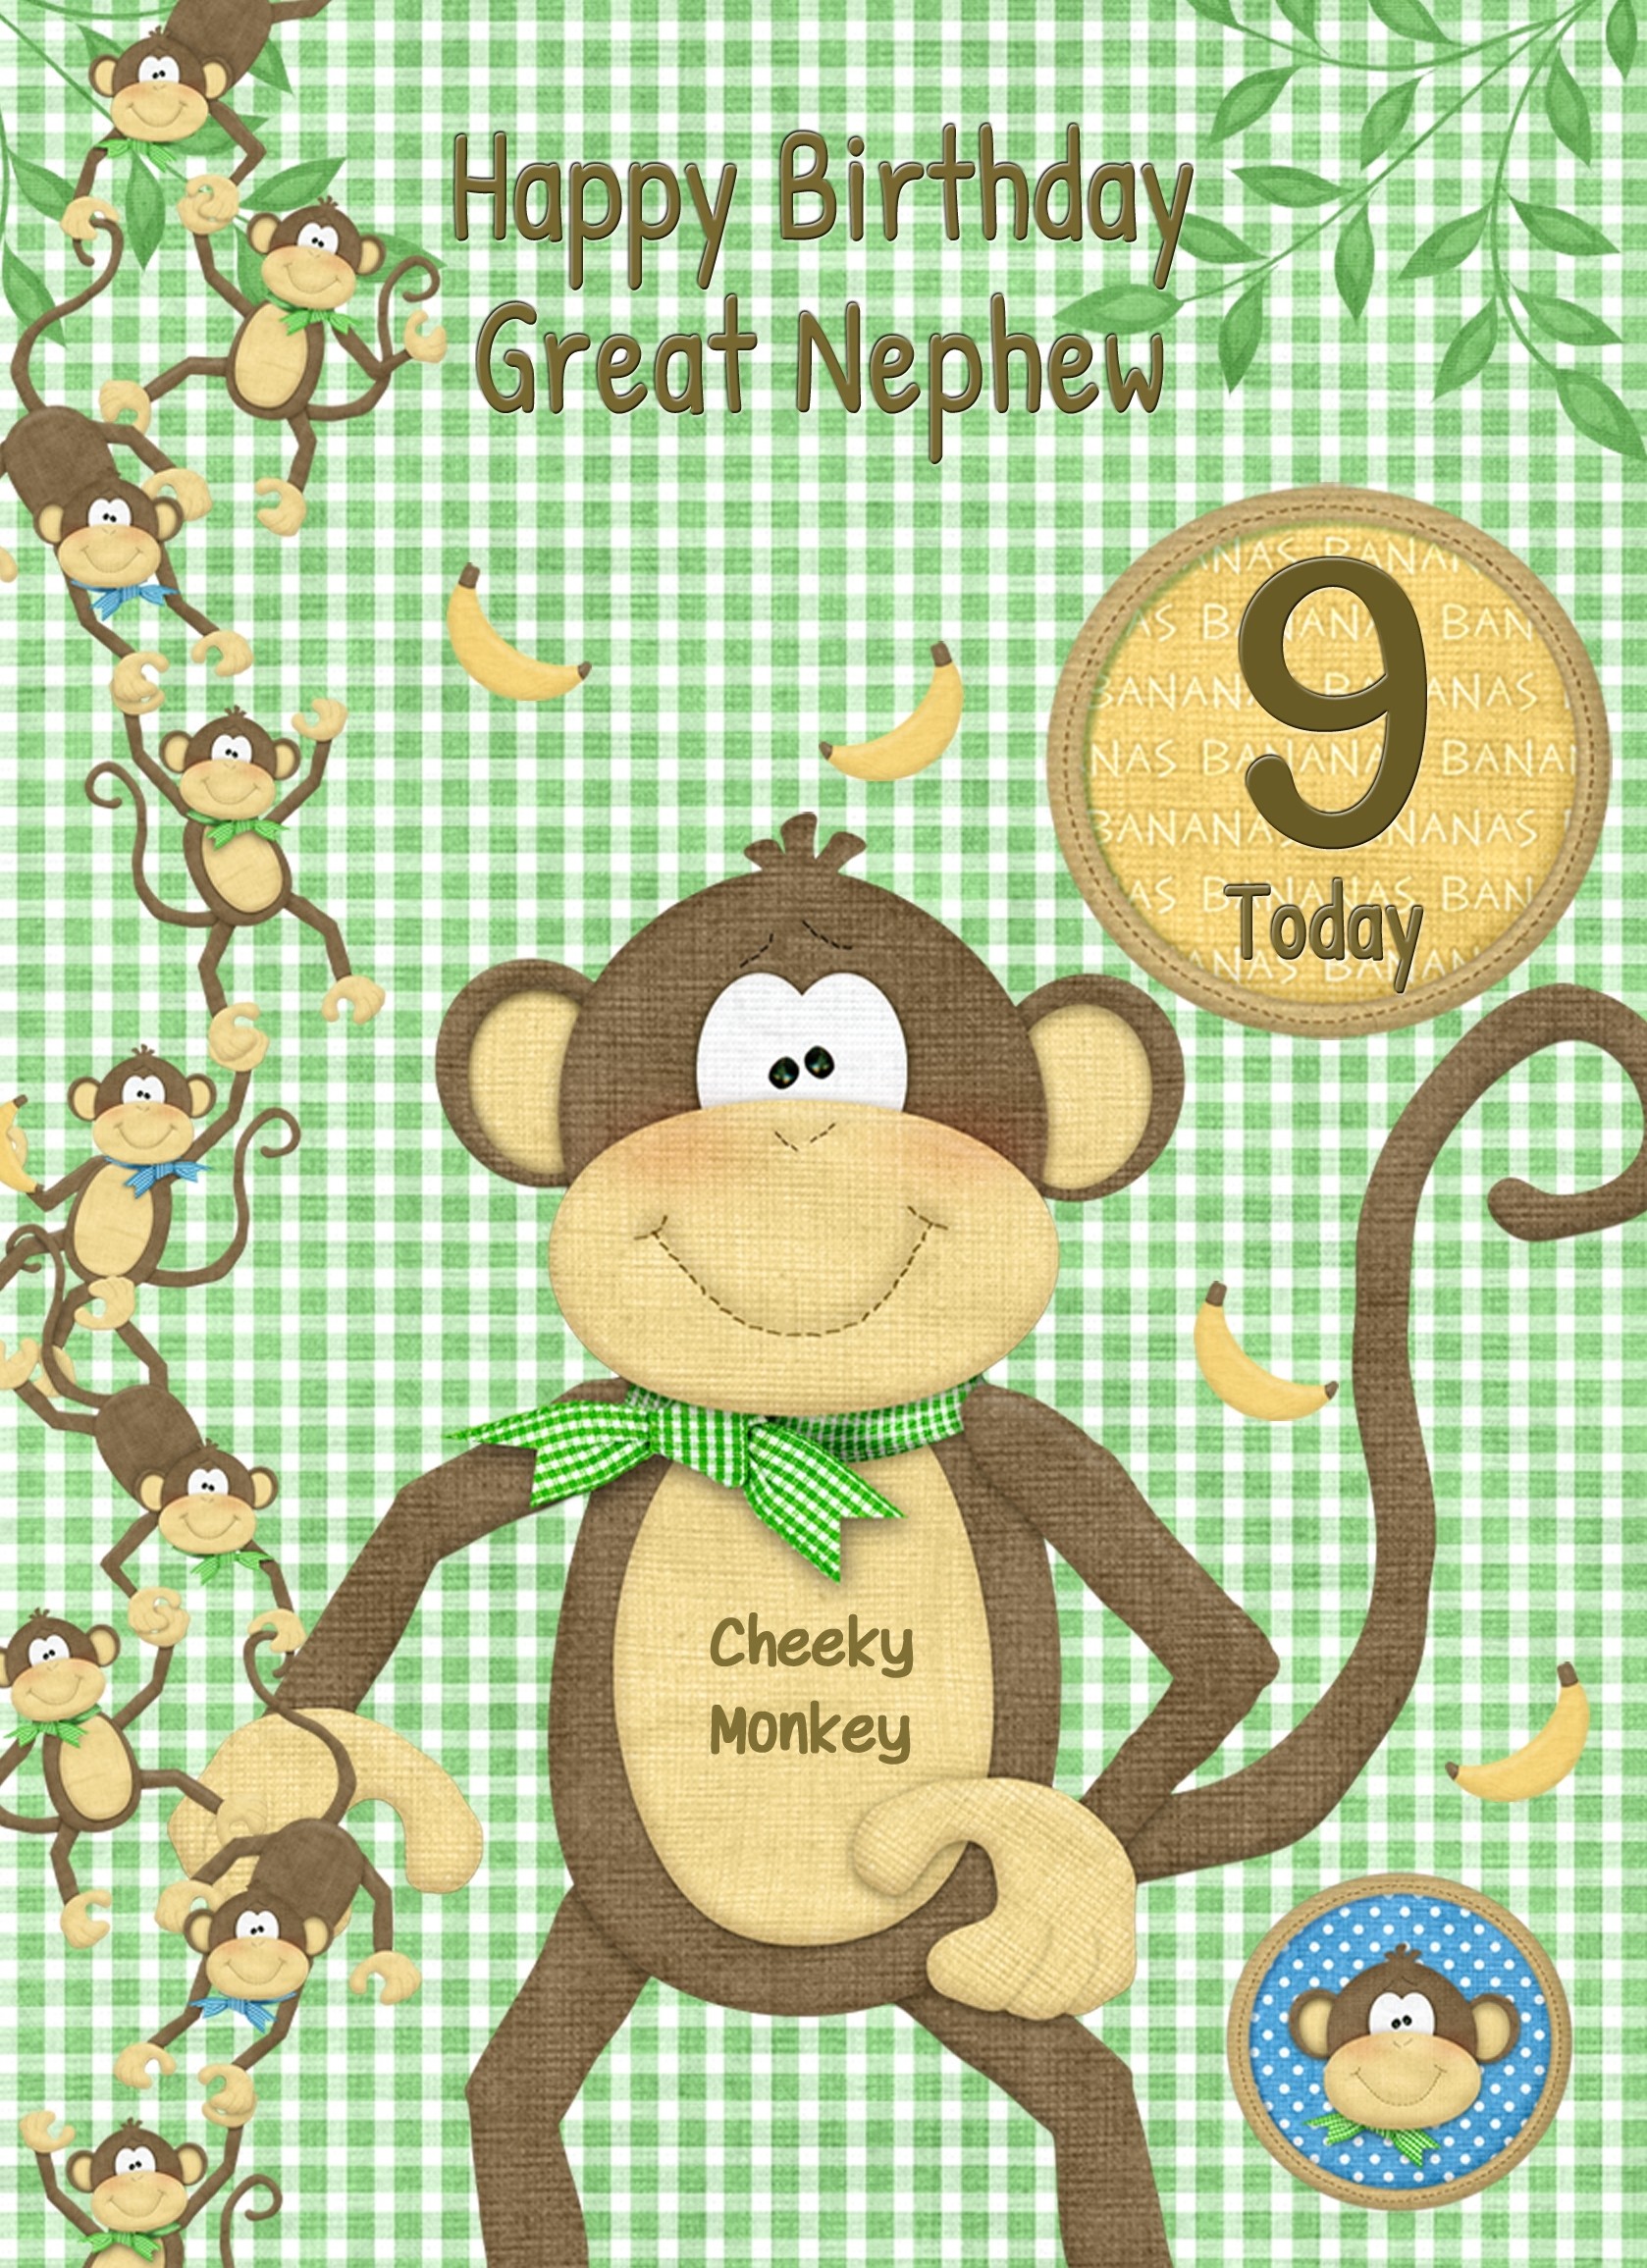 Kids 9th Birthday Cheeky Monkey Cartoon Card for Great Nephew